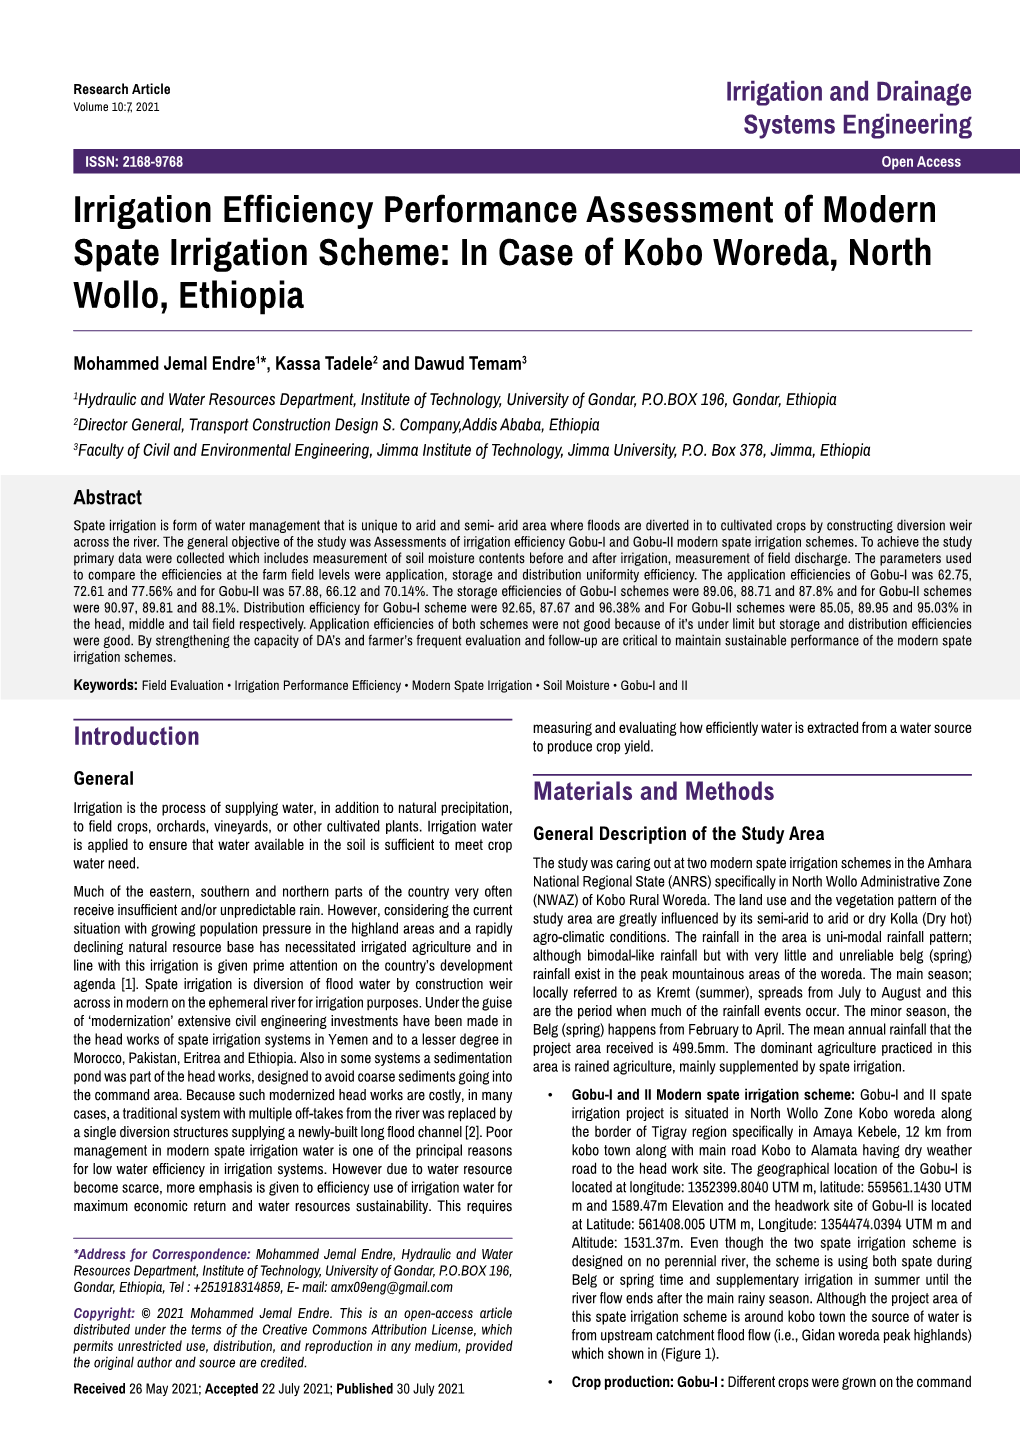 Irrigation Efficiency Performance Assessment of Modern Spate Irrigation Scheme: in Case of Kobo Woreda, North Wollo, Ethiopia